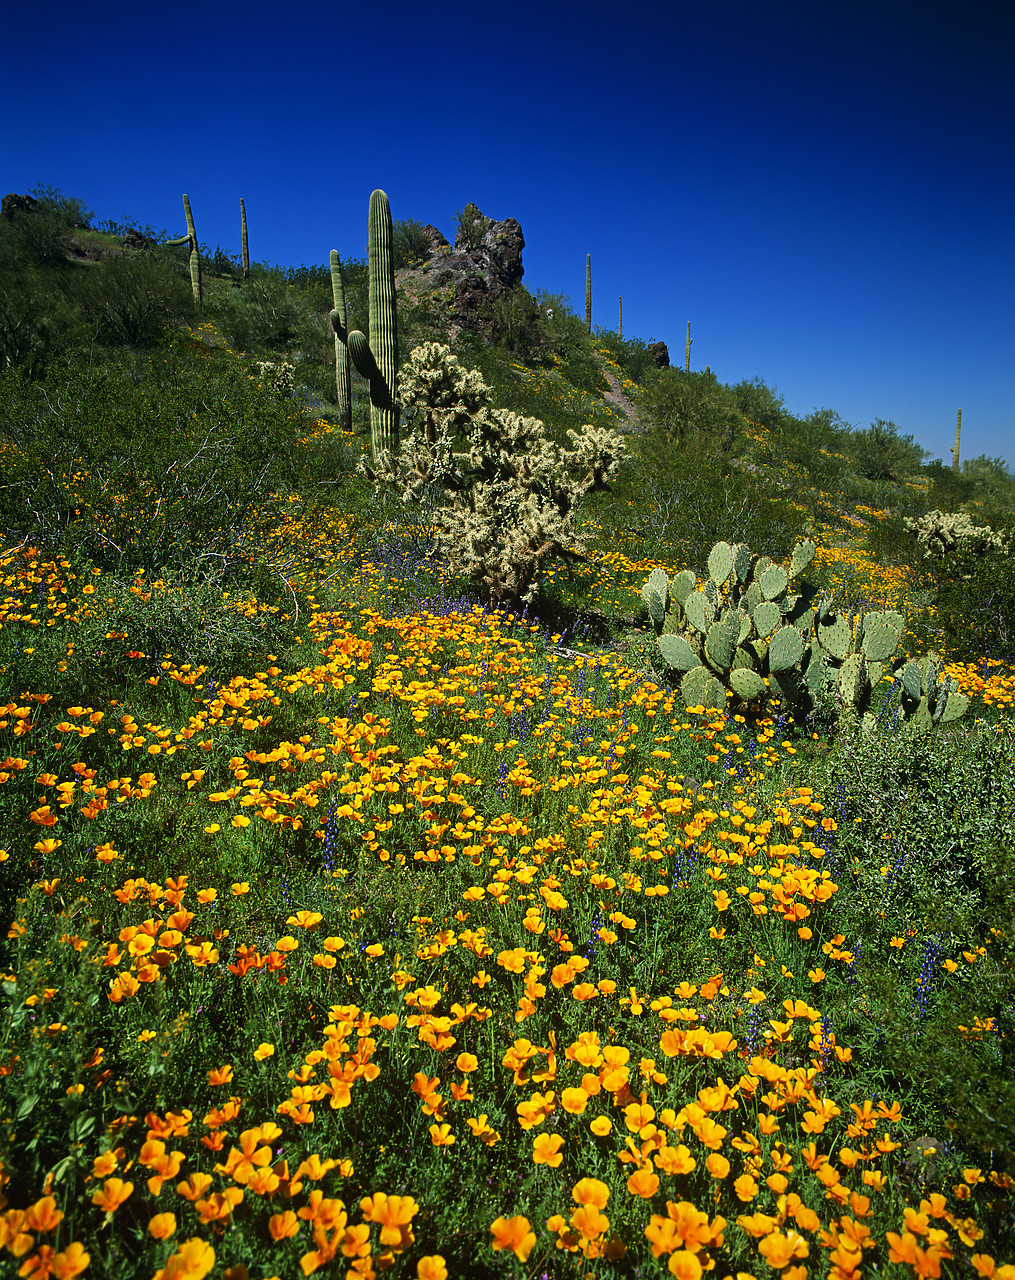 #980612-1 - Mexican Poppies, Picacho Peak State Park, Arizona, USA